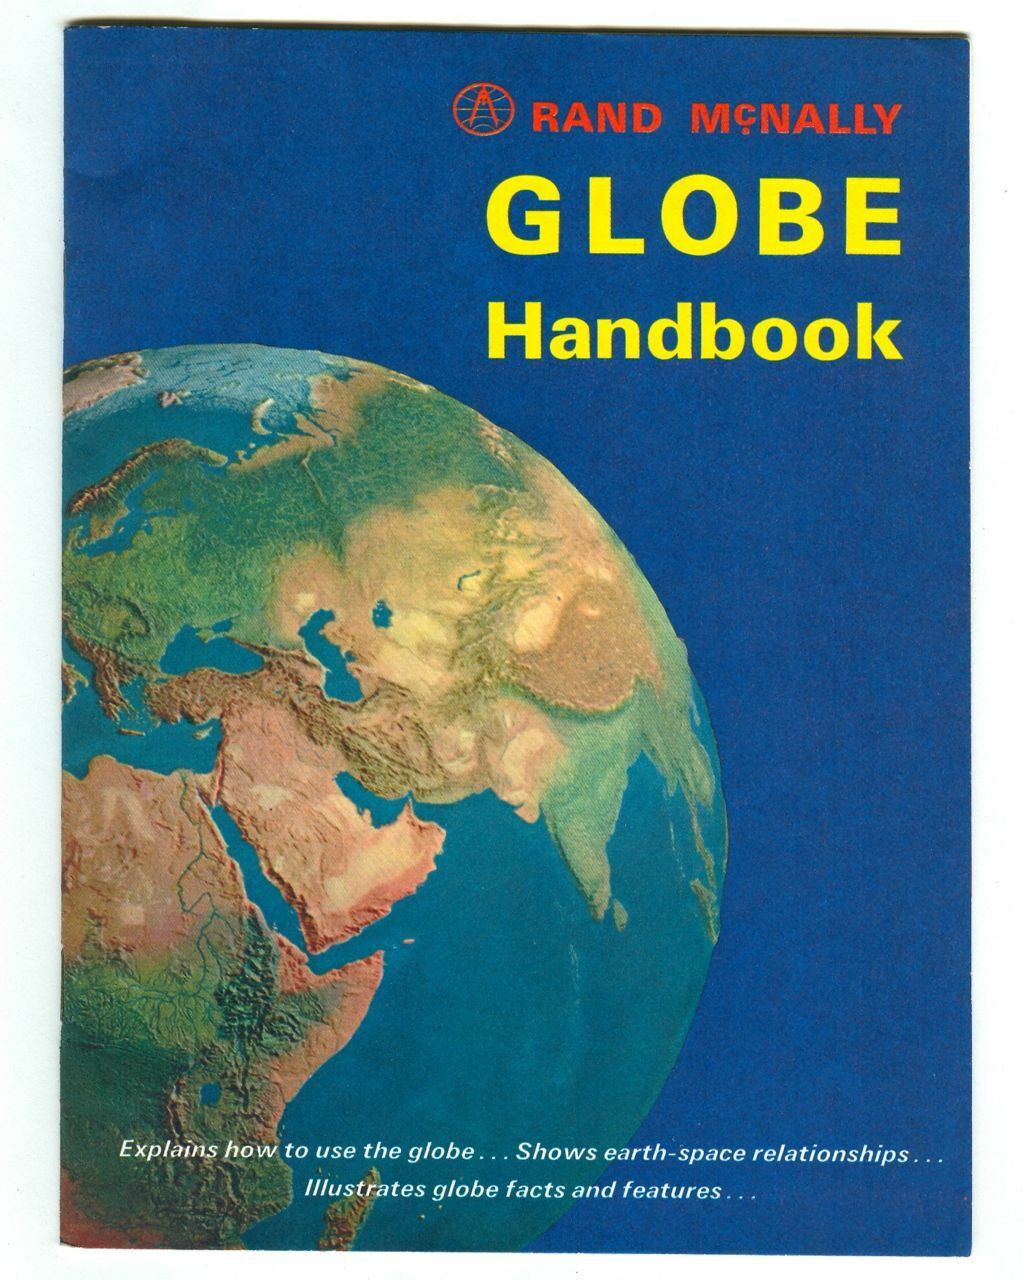 Vintage 1971 Rand McNally GLOBE HANDBOOK Advertising Manual & How To Booklet